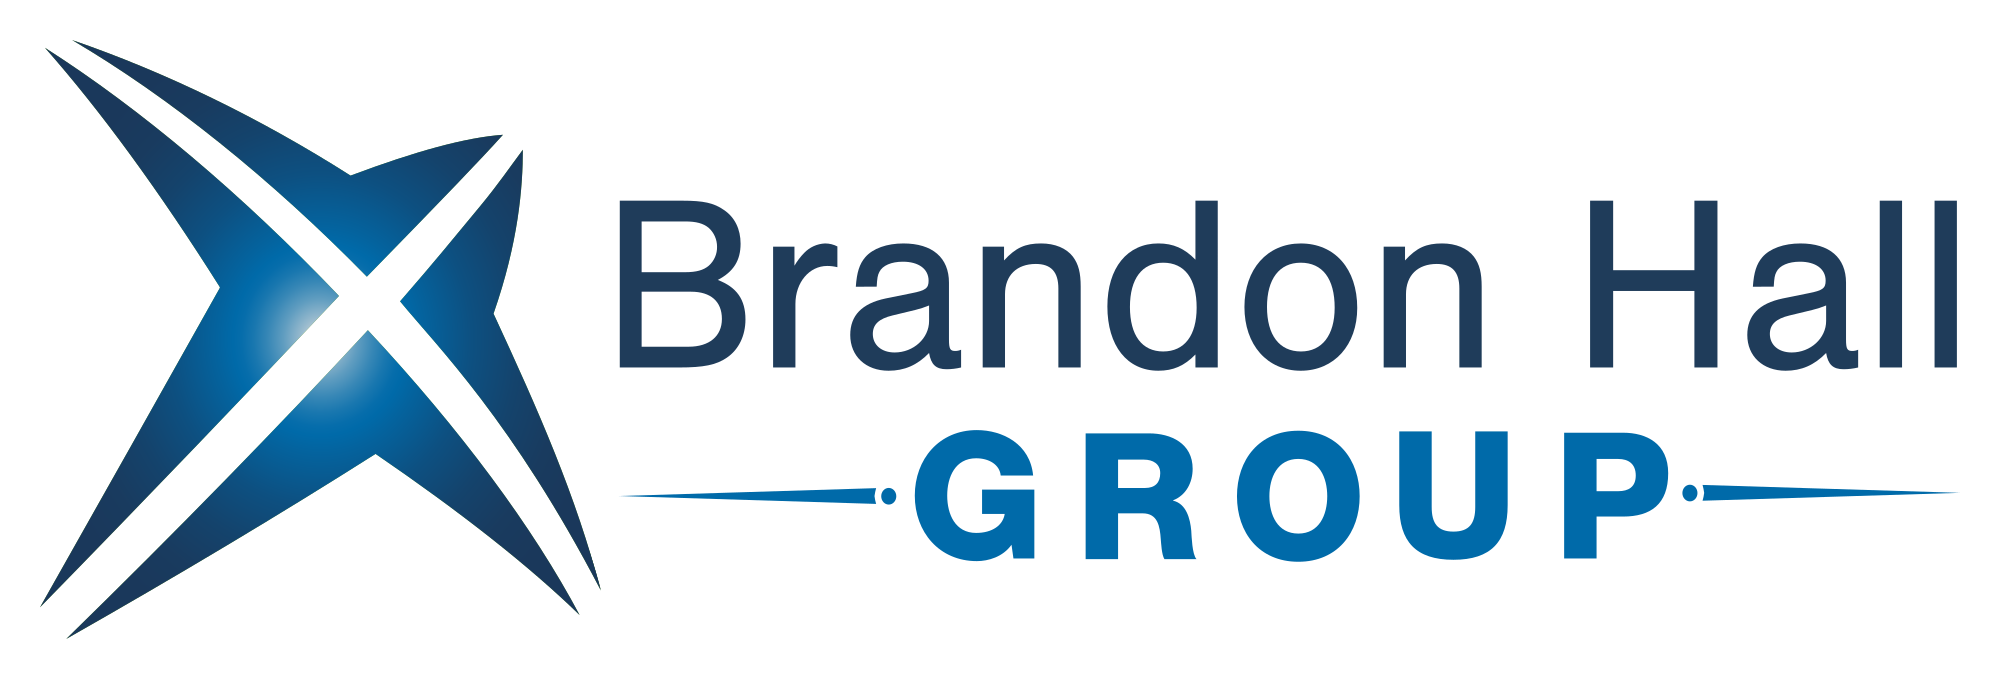 Hall group. Brandon Hall. Brandon logo. We-on Group логотип. Uhlmann Group logo.